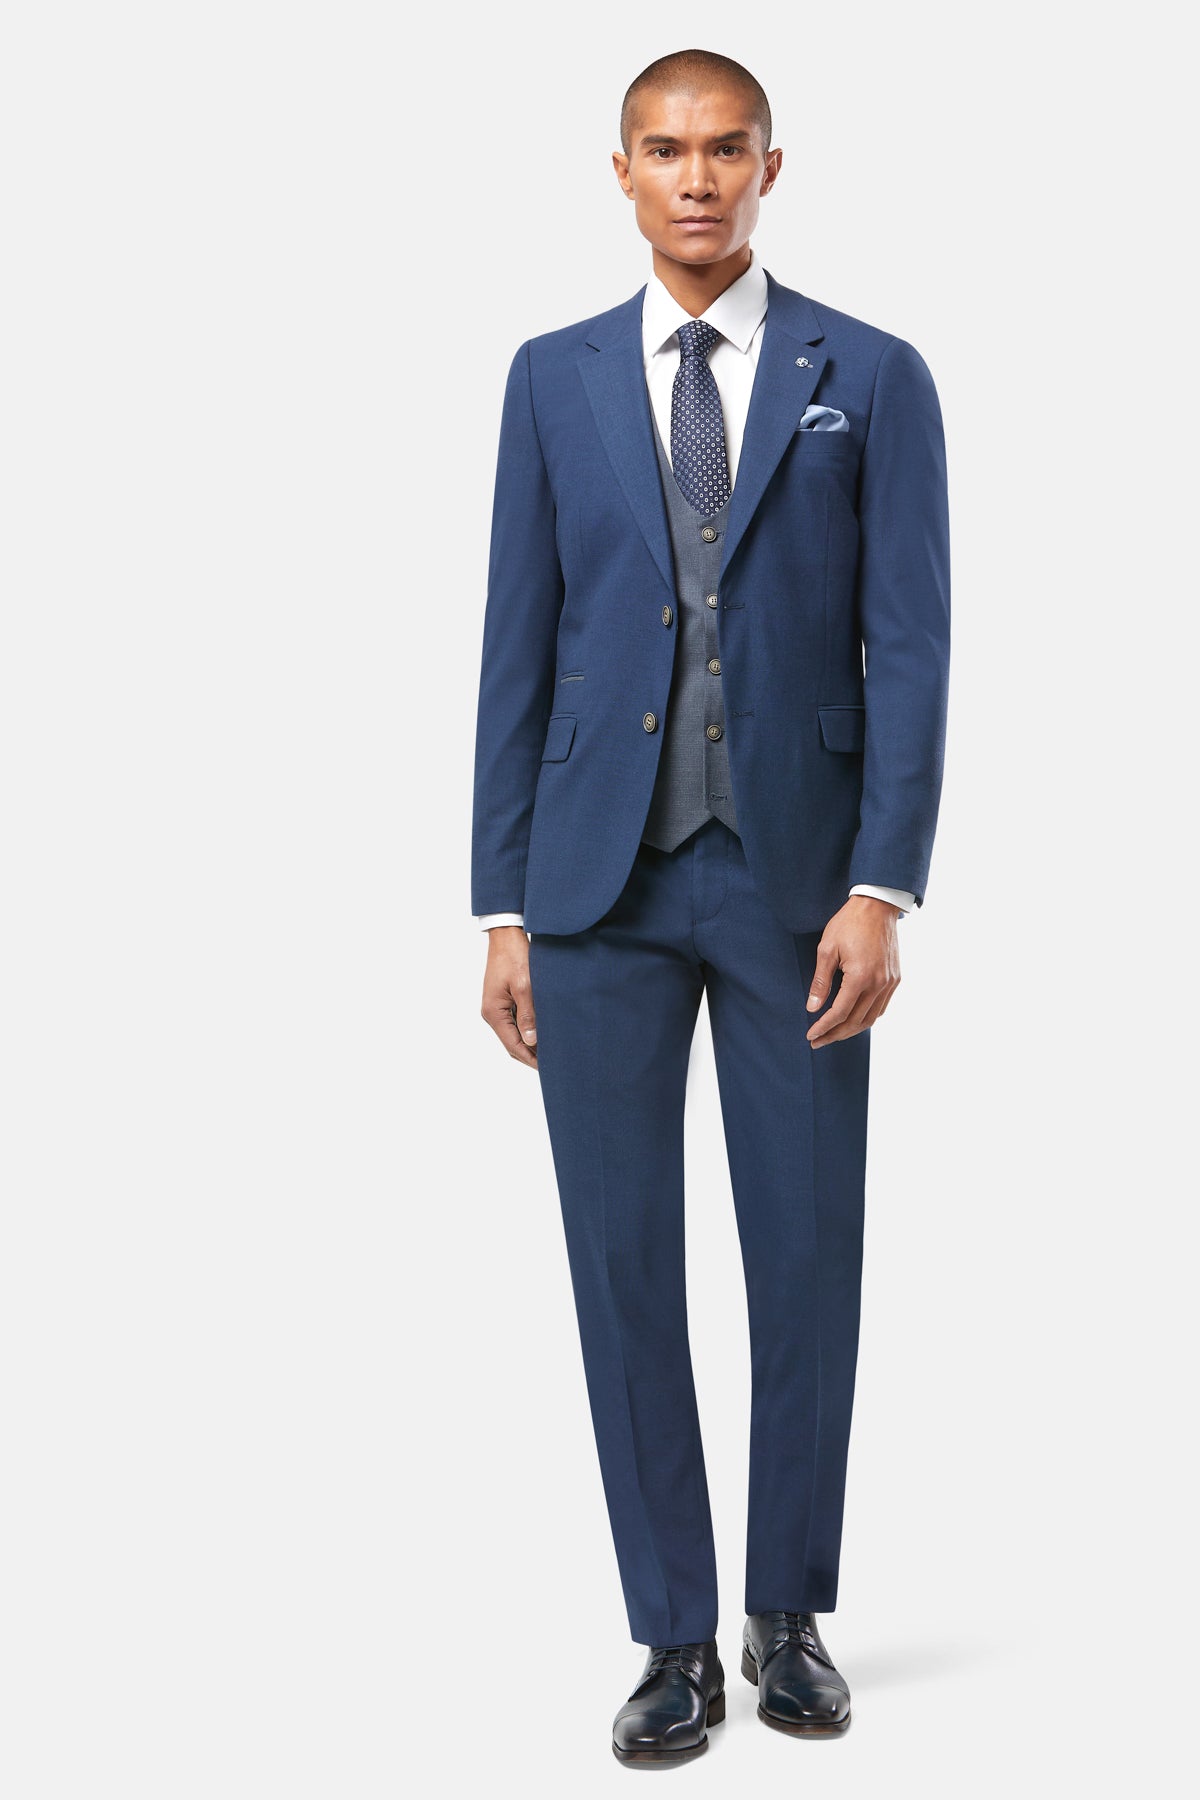 Suits - Benetti Menswear